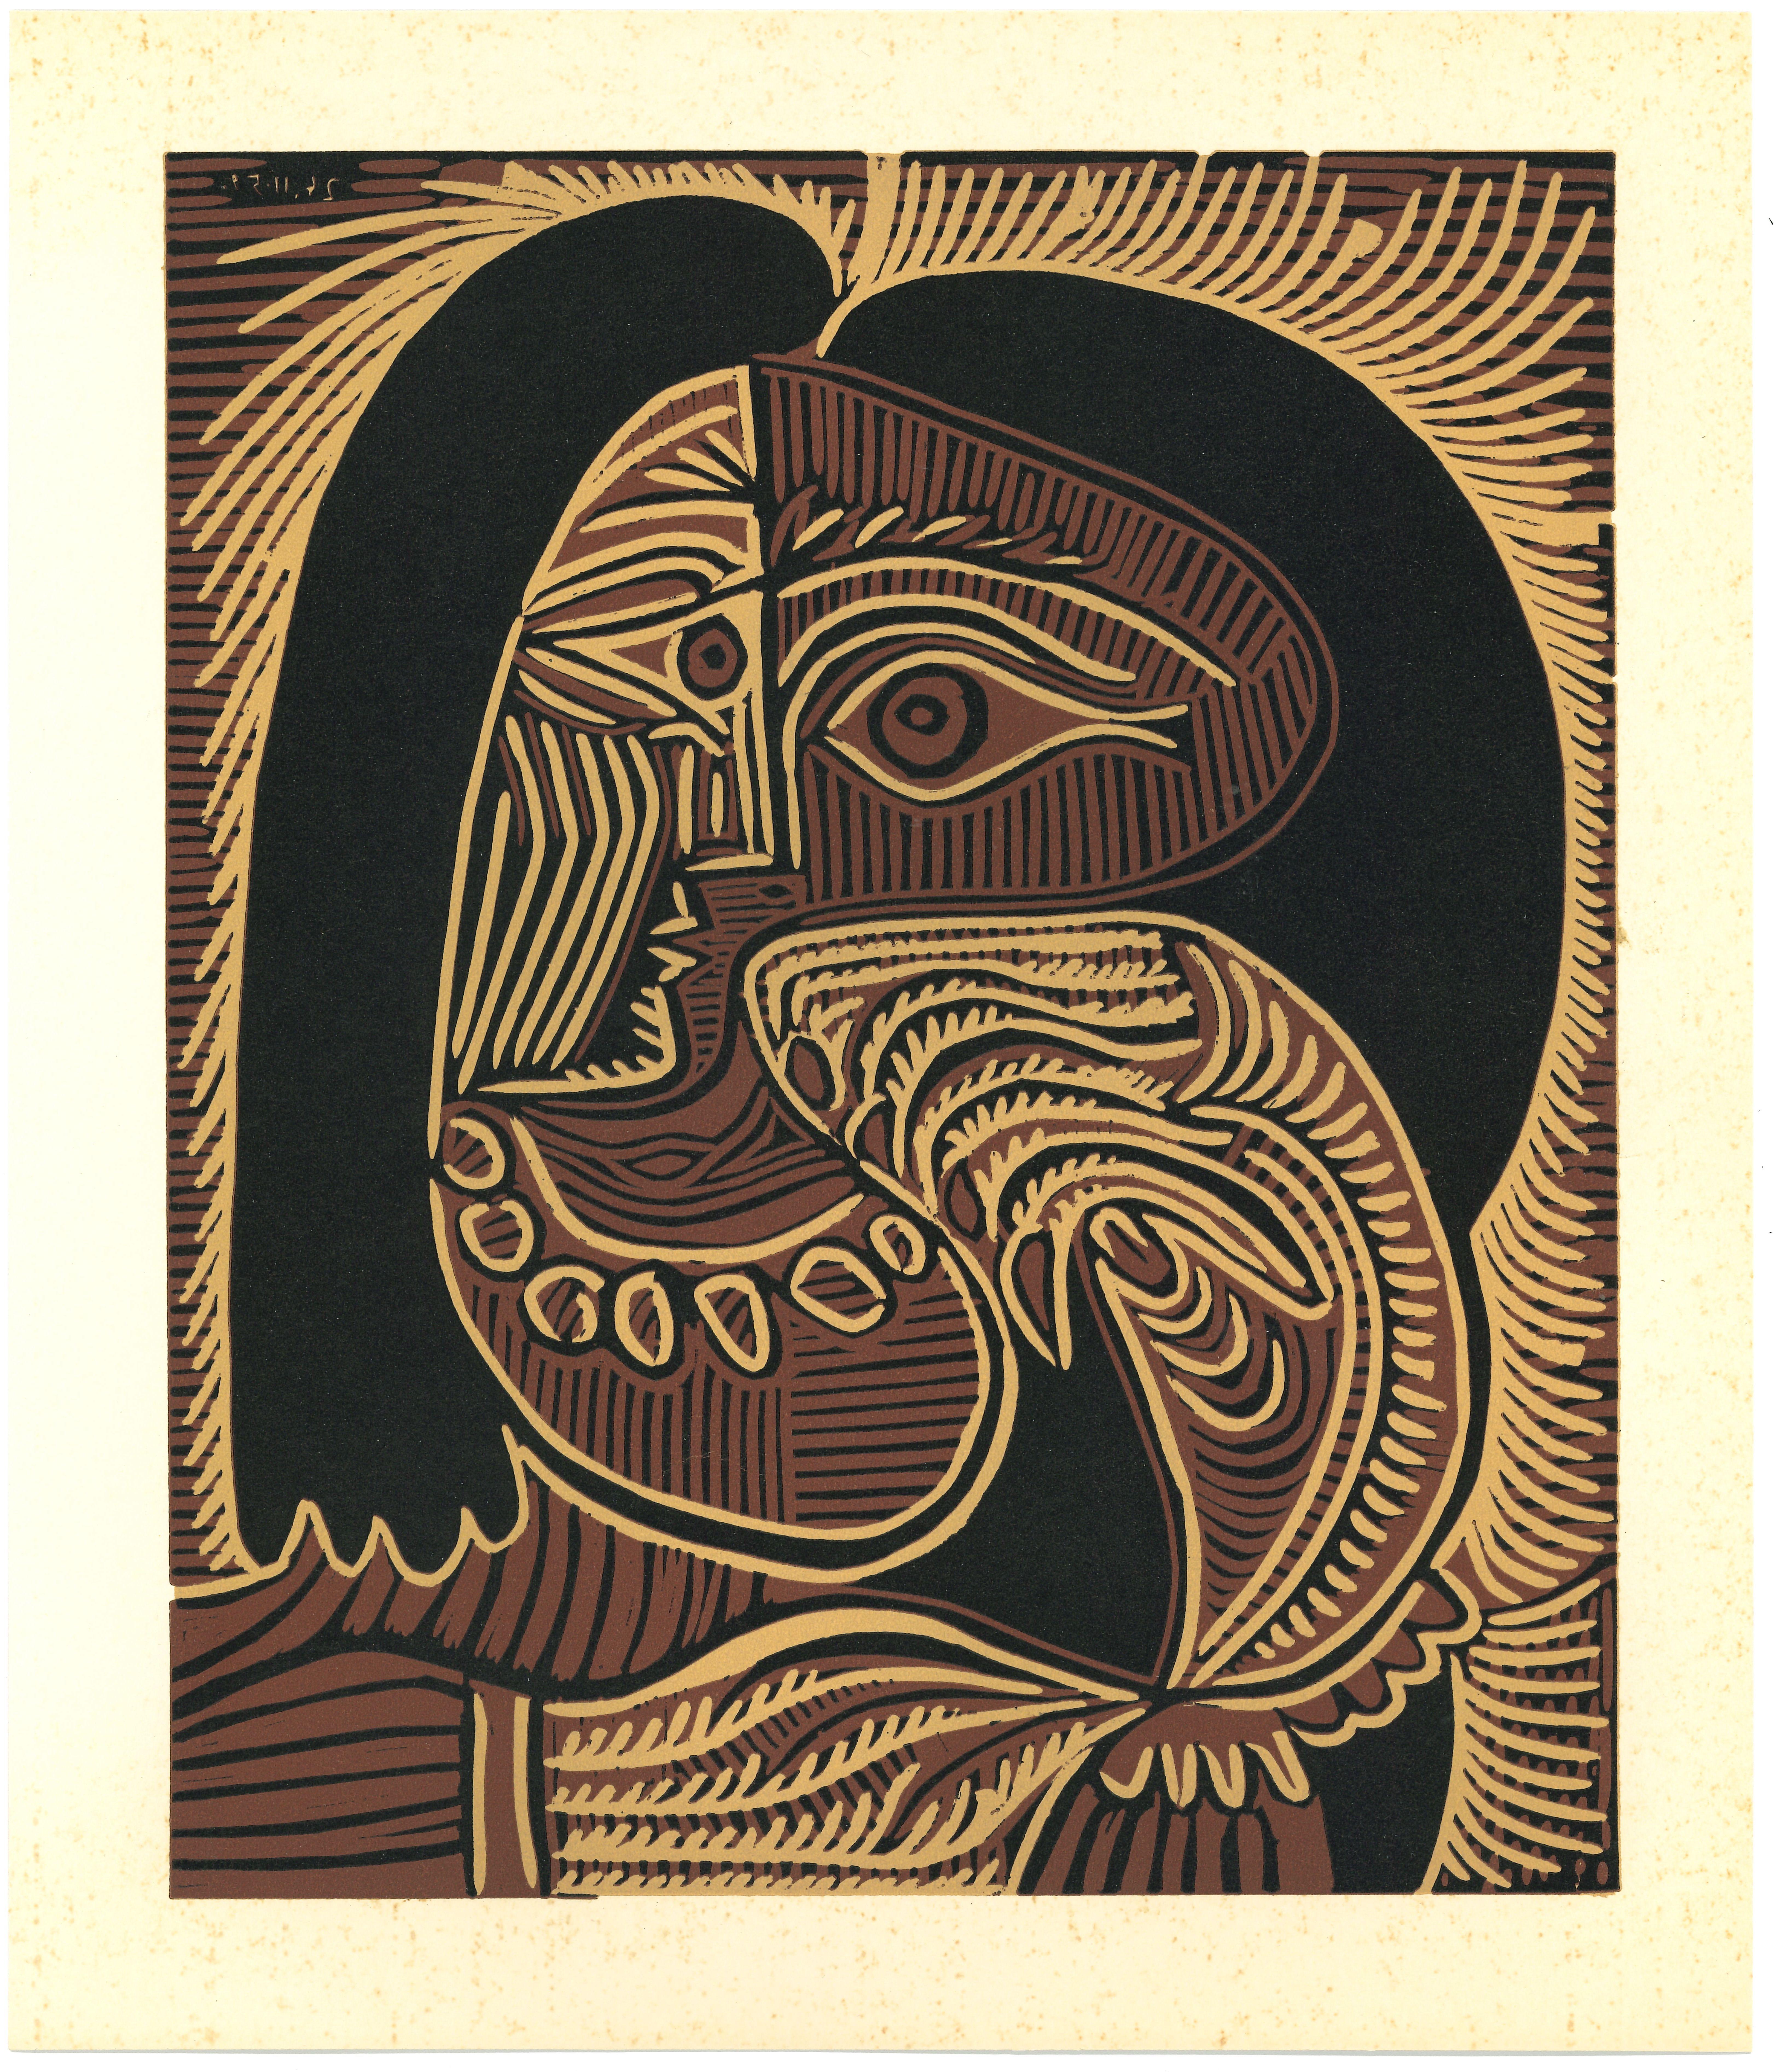 (after) Pablo Picasso Figurative Print – Femme au Collier – Nach Pablo Picasso entworfenes Reproduktionsprodukt im Linoschliff – 1962